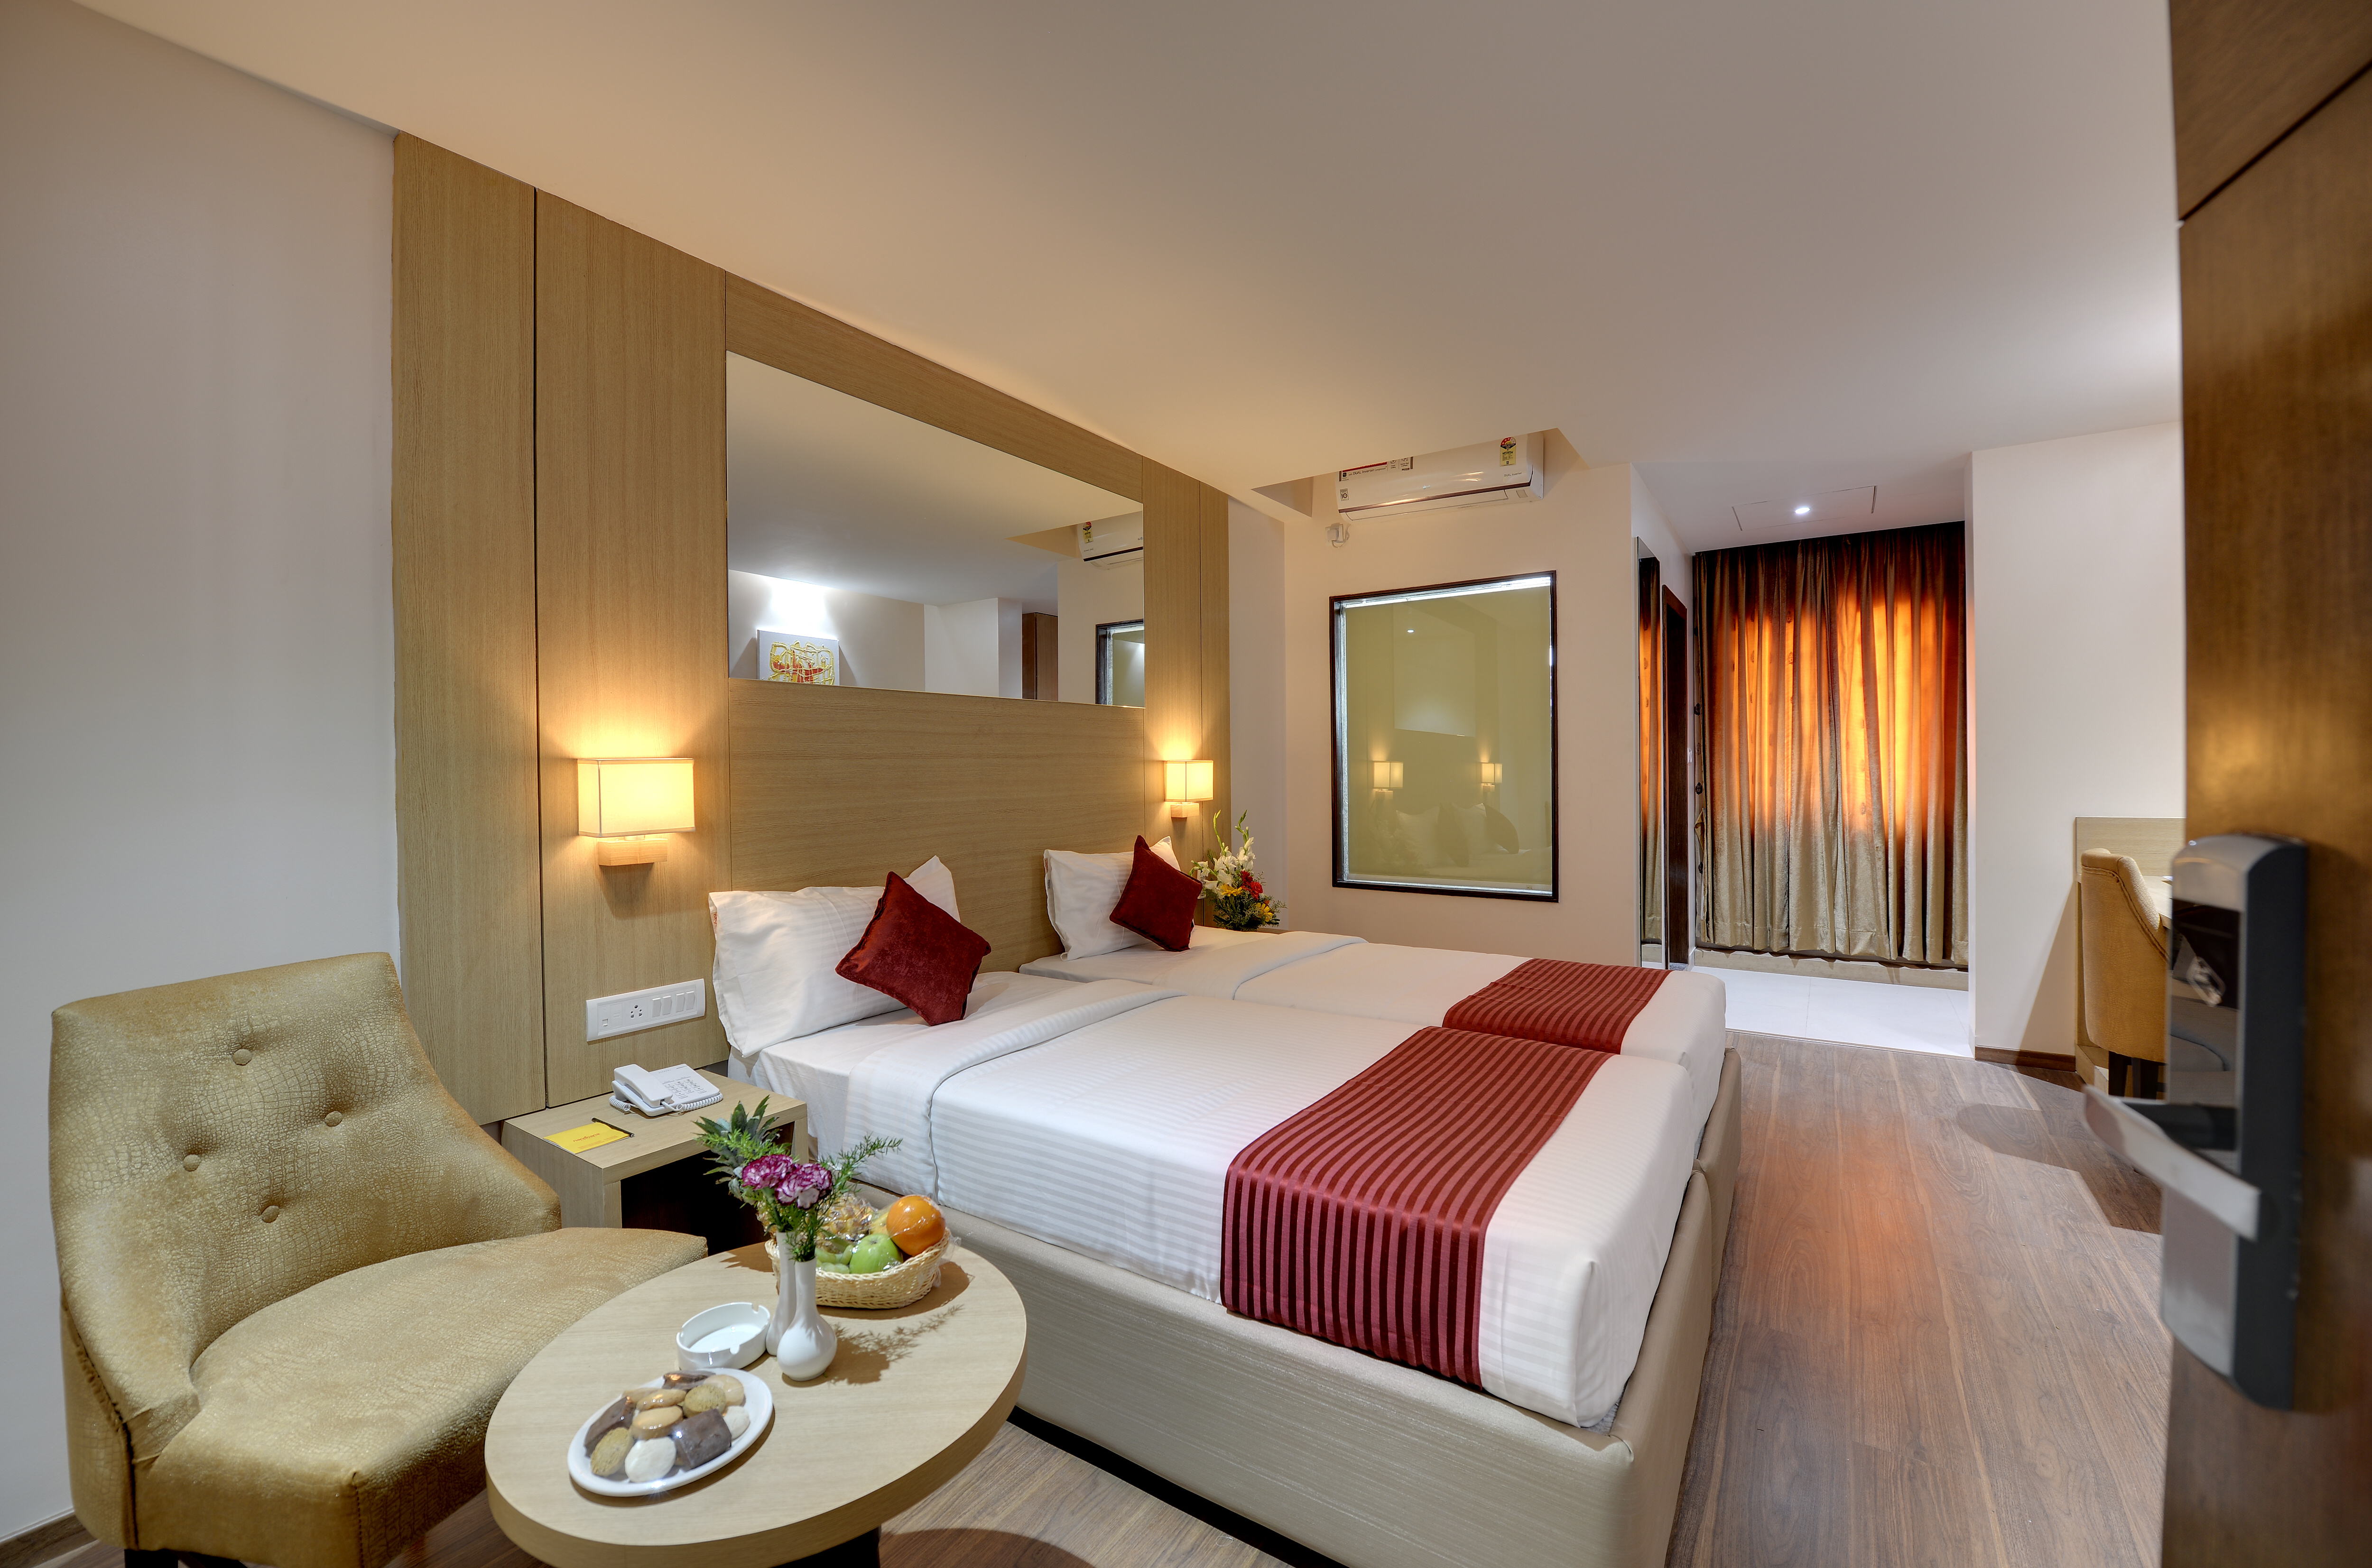 Club Room Hotel Nandhana Pride Bangalore Best Hotels 1